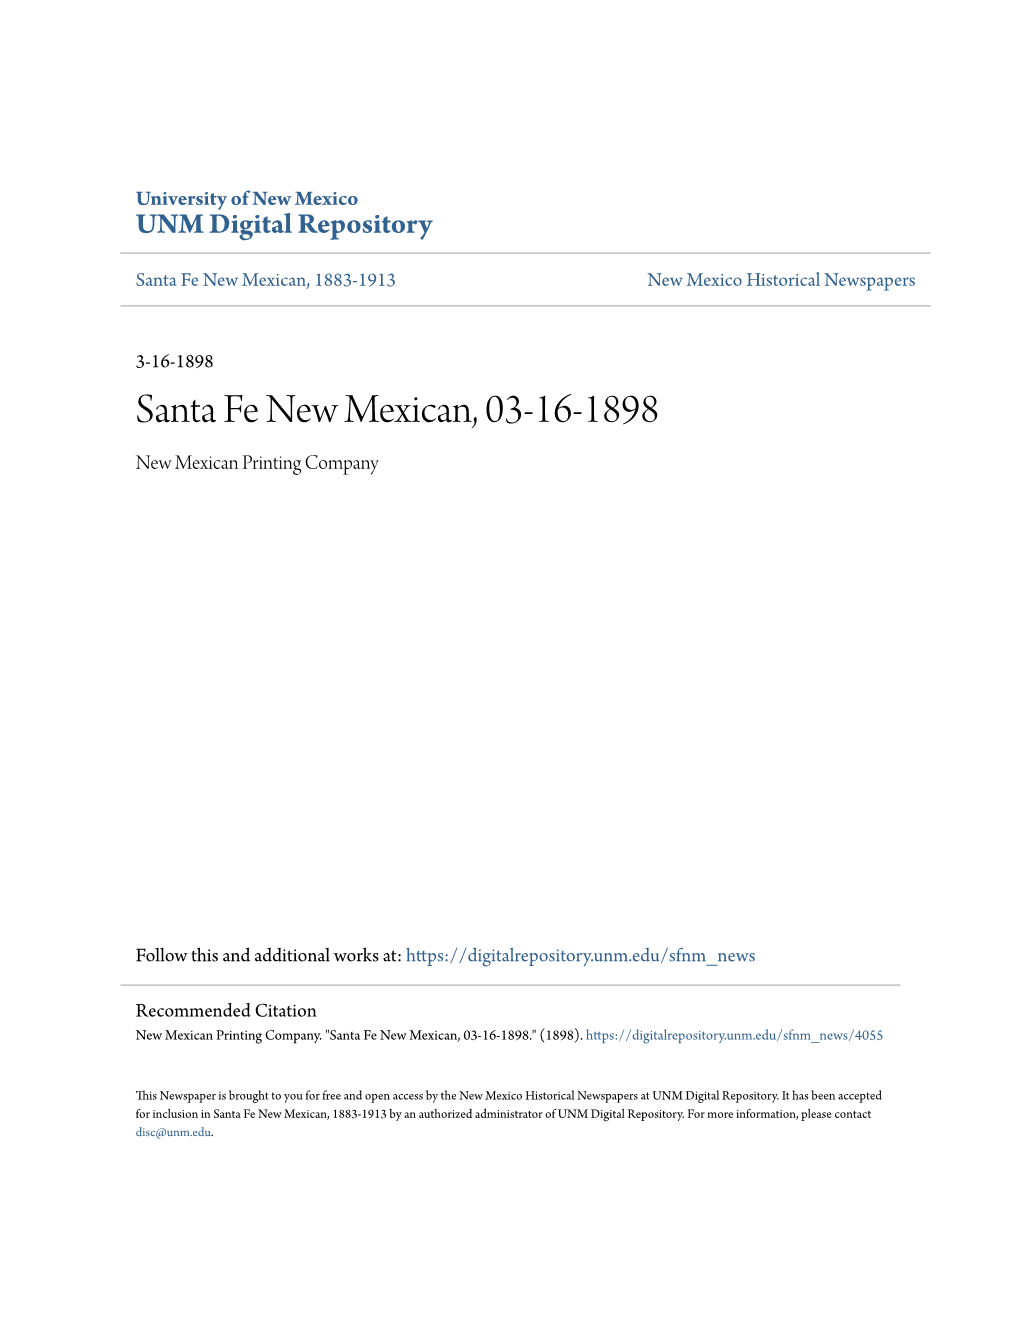 Santa Fe New Mexican, 03-16-1898 New Mexican Printing Company